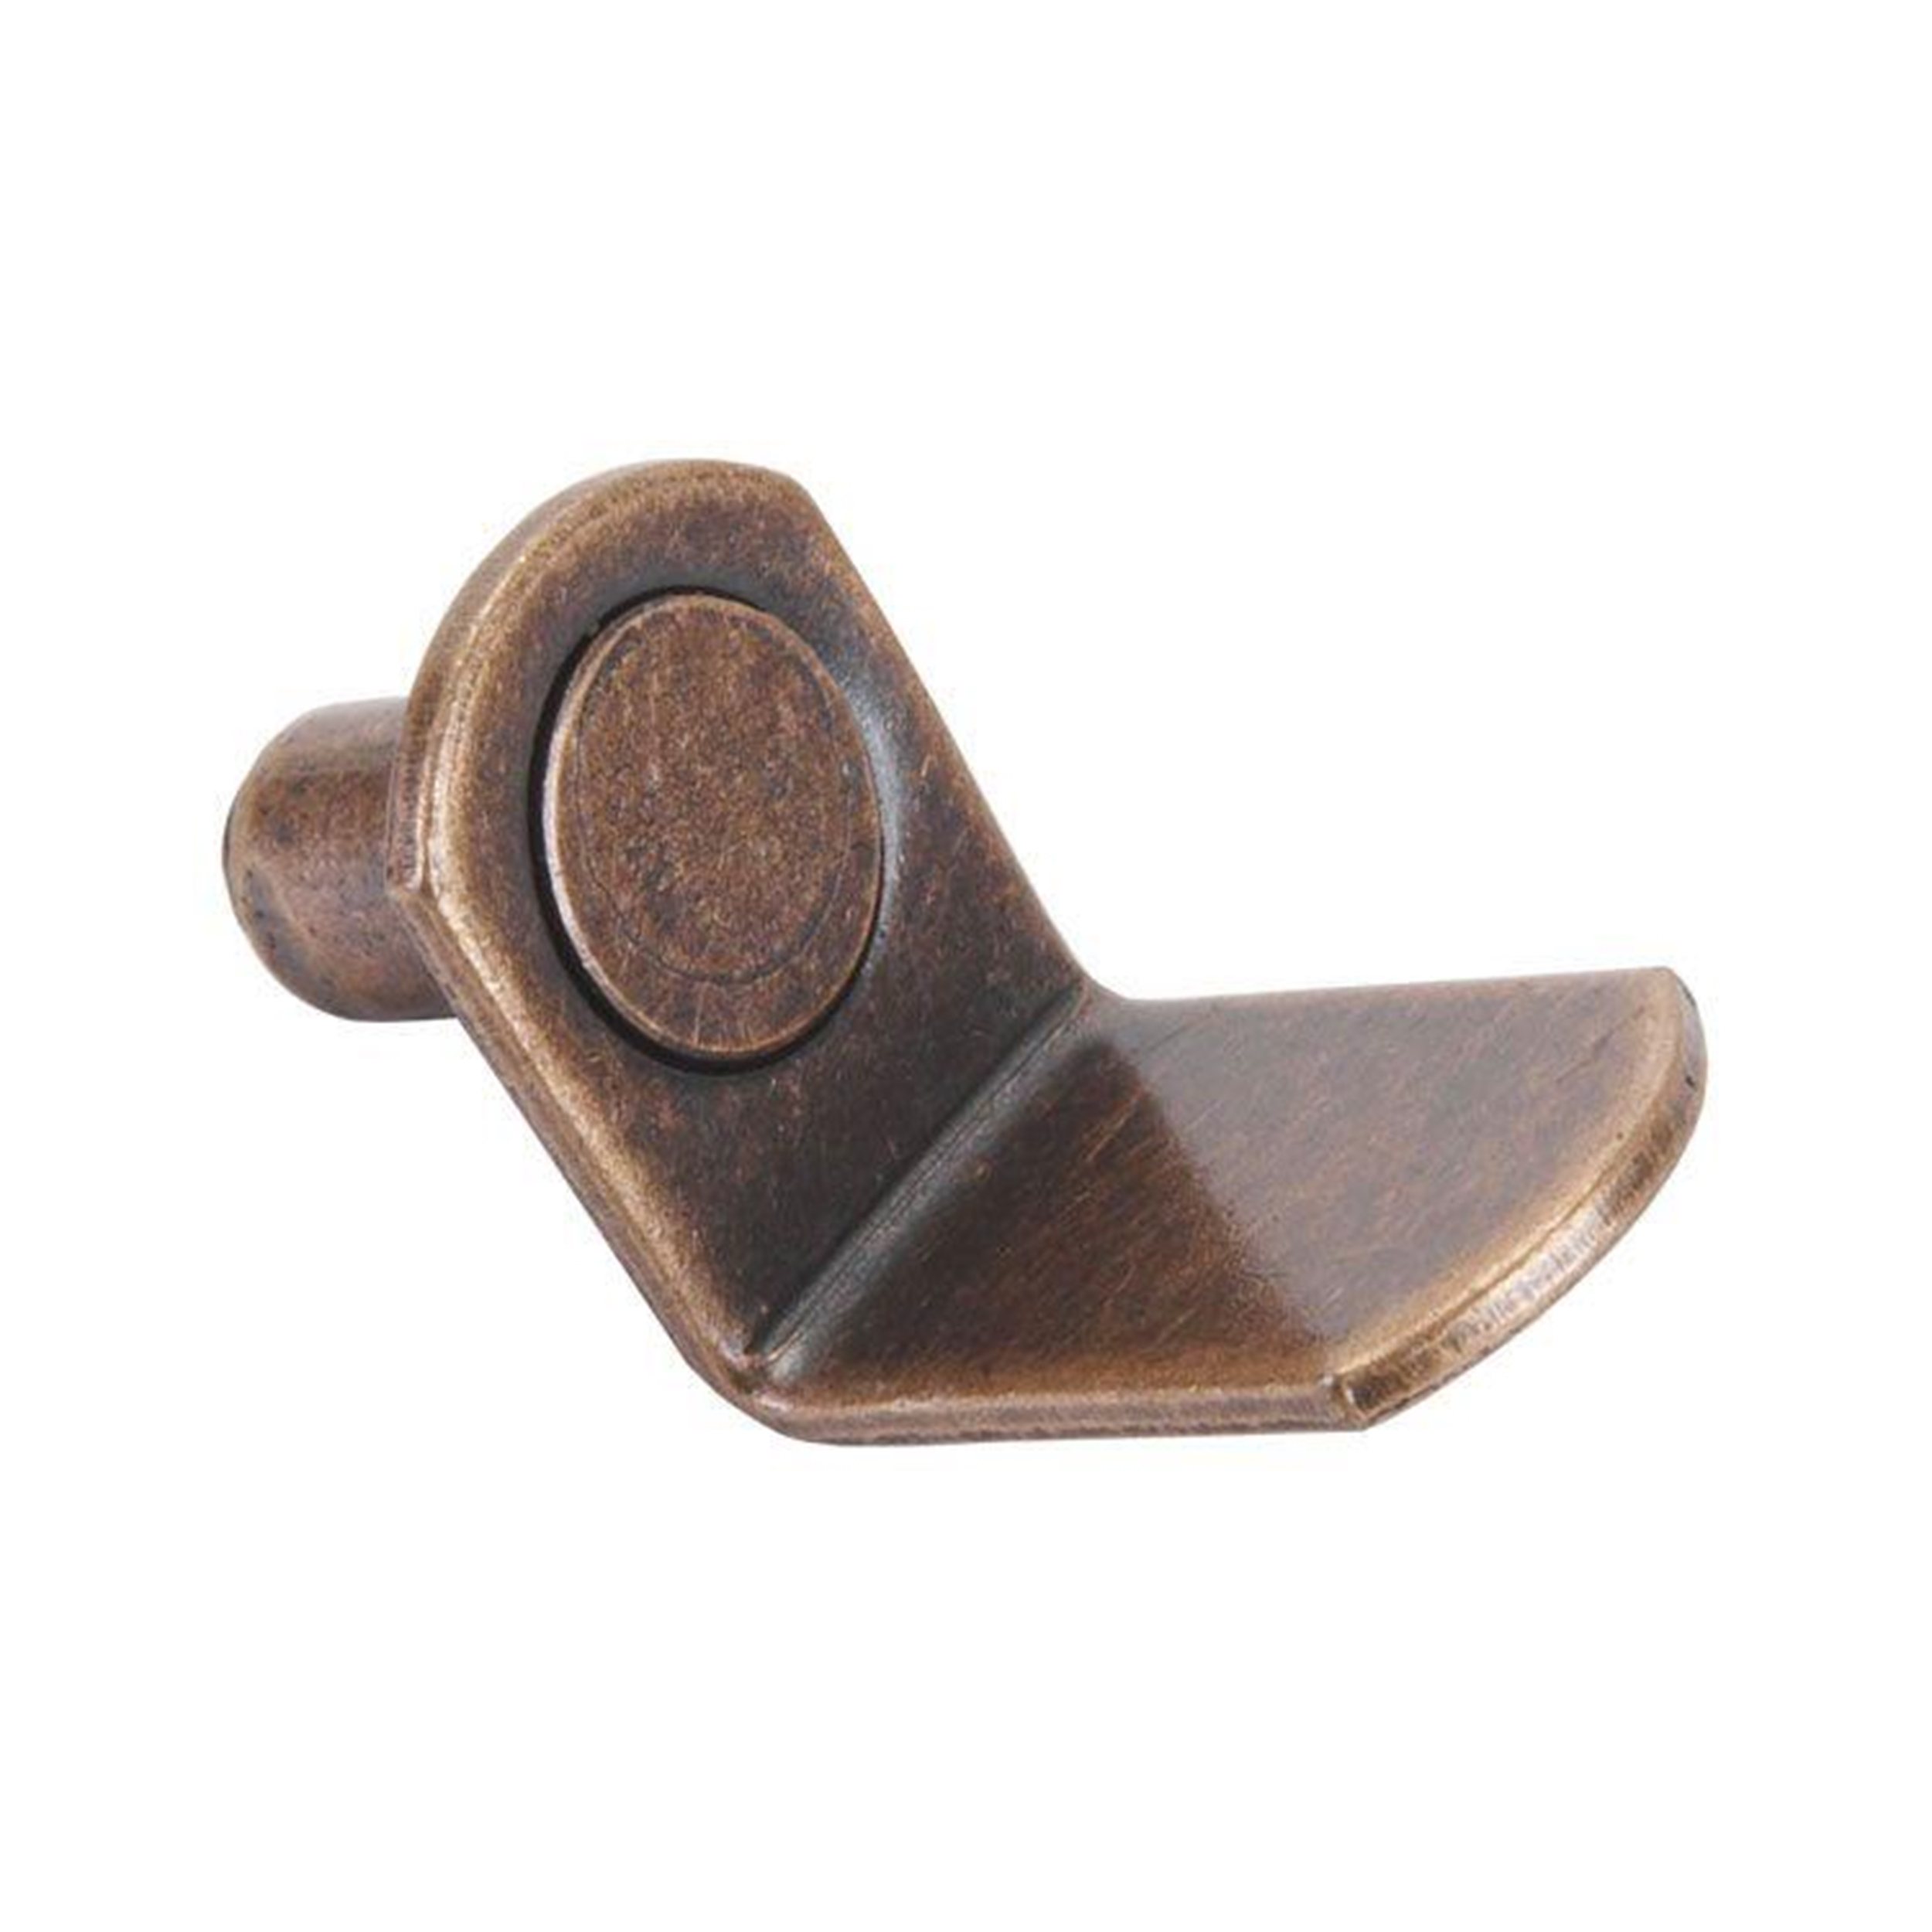 Shelf Supports, Bracket Style, Bronze, 1/4", 25 Pack